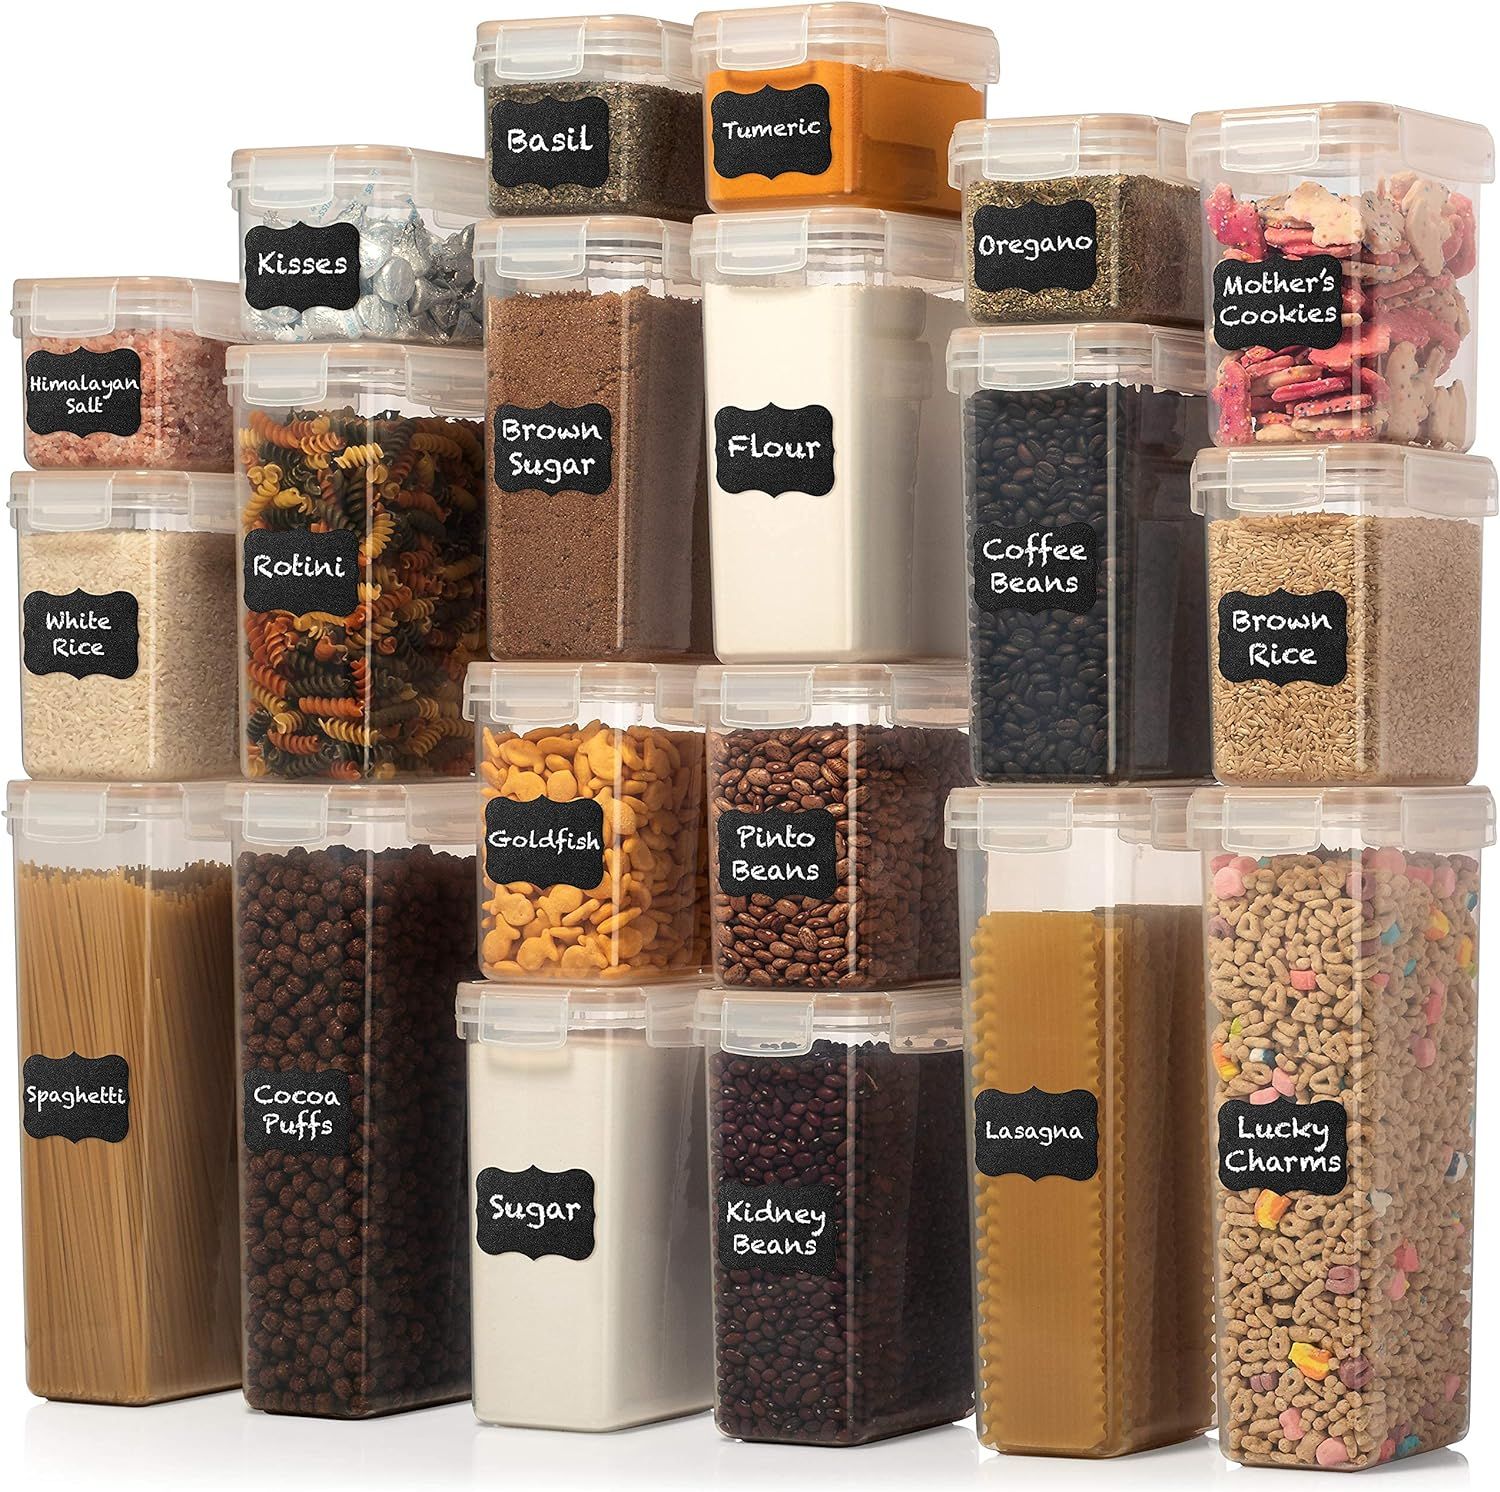 LARGE SET Airtight Food Storage Container Set - 20 PC - Kitchen & Pantry Organization - BPA-Free ... | Amazon (US)